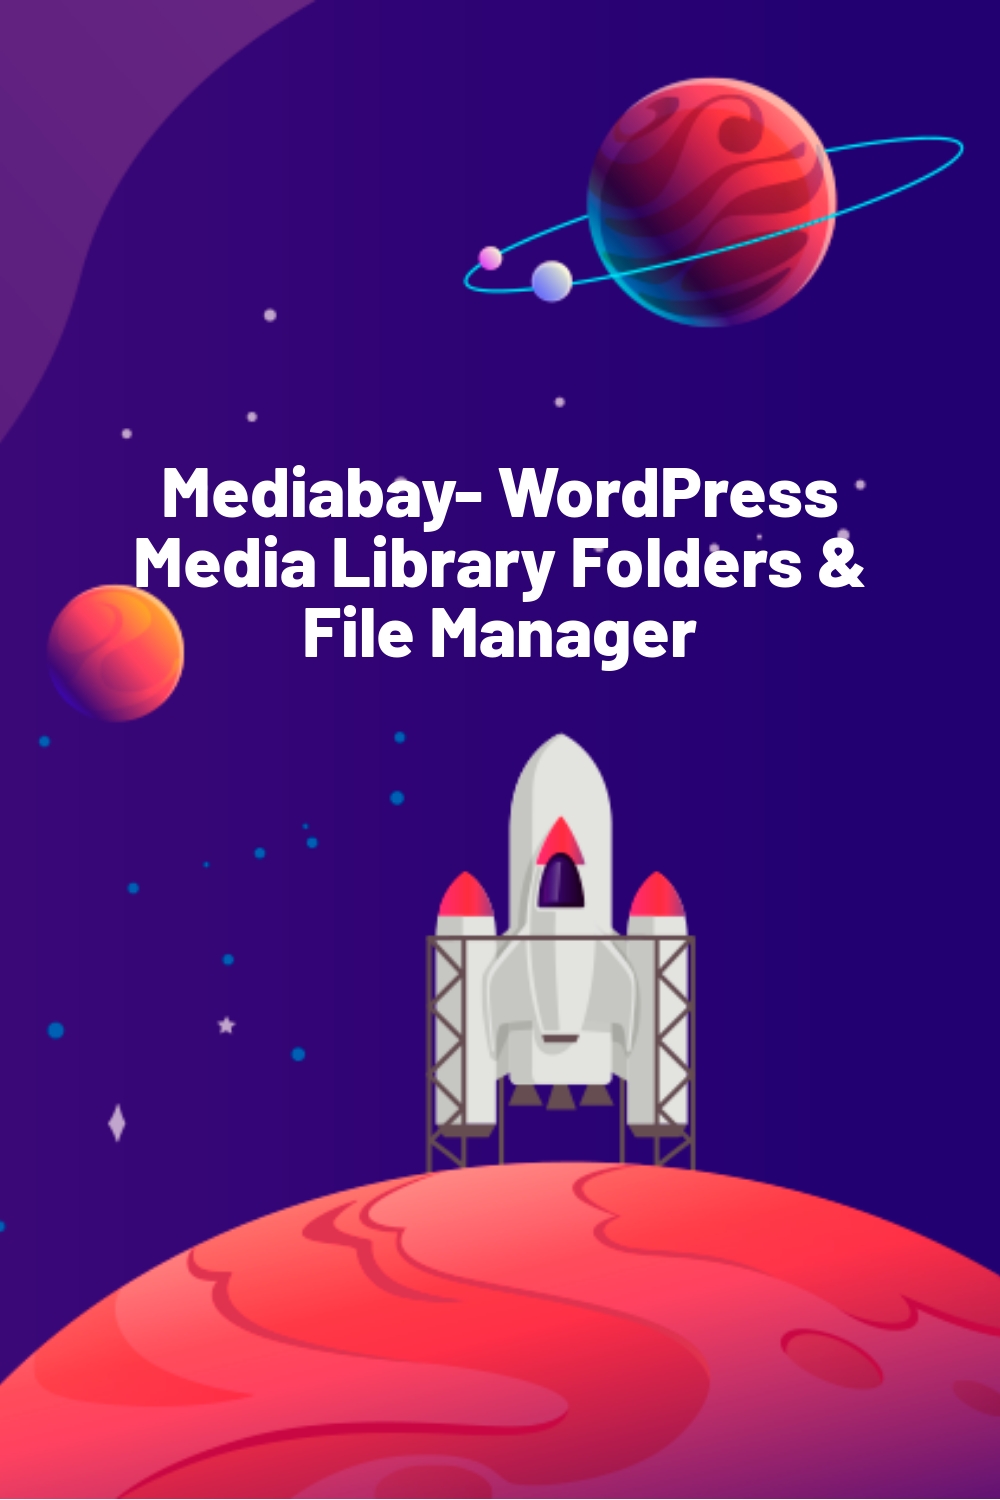 Mediabay- WordPress Media Library Folders & File Manager